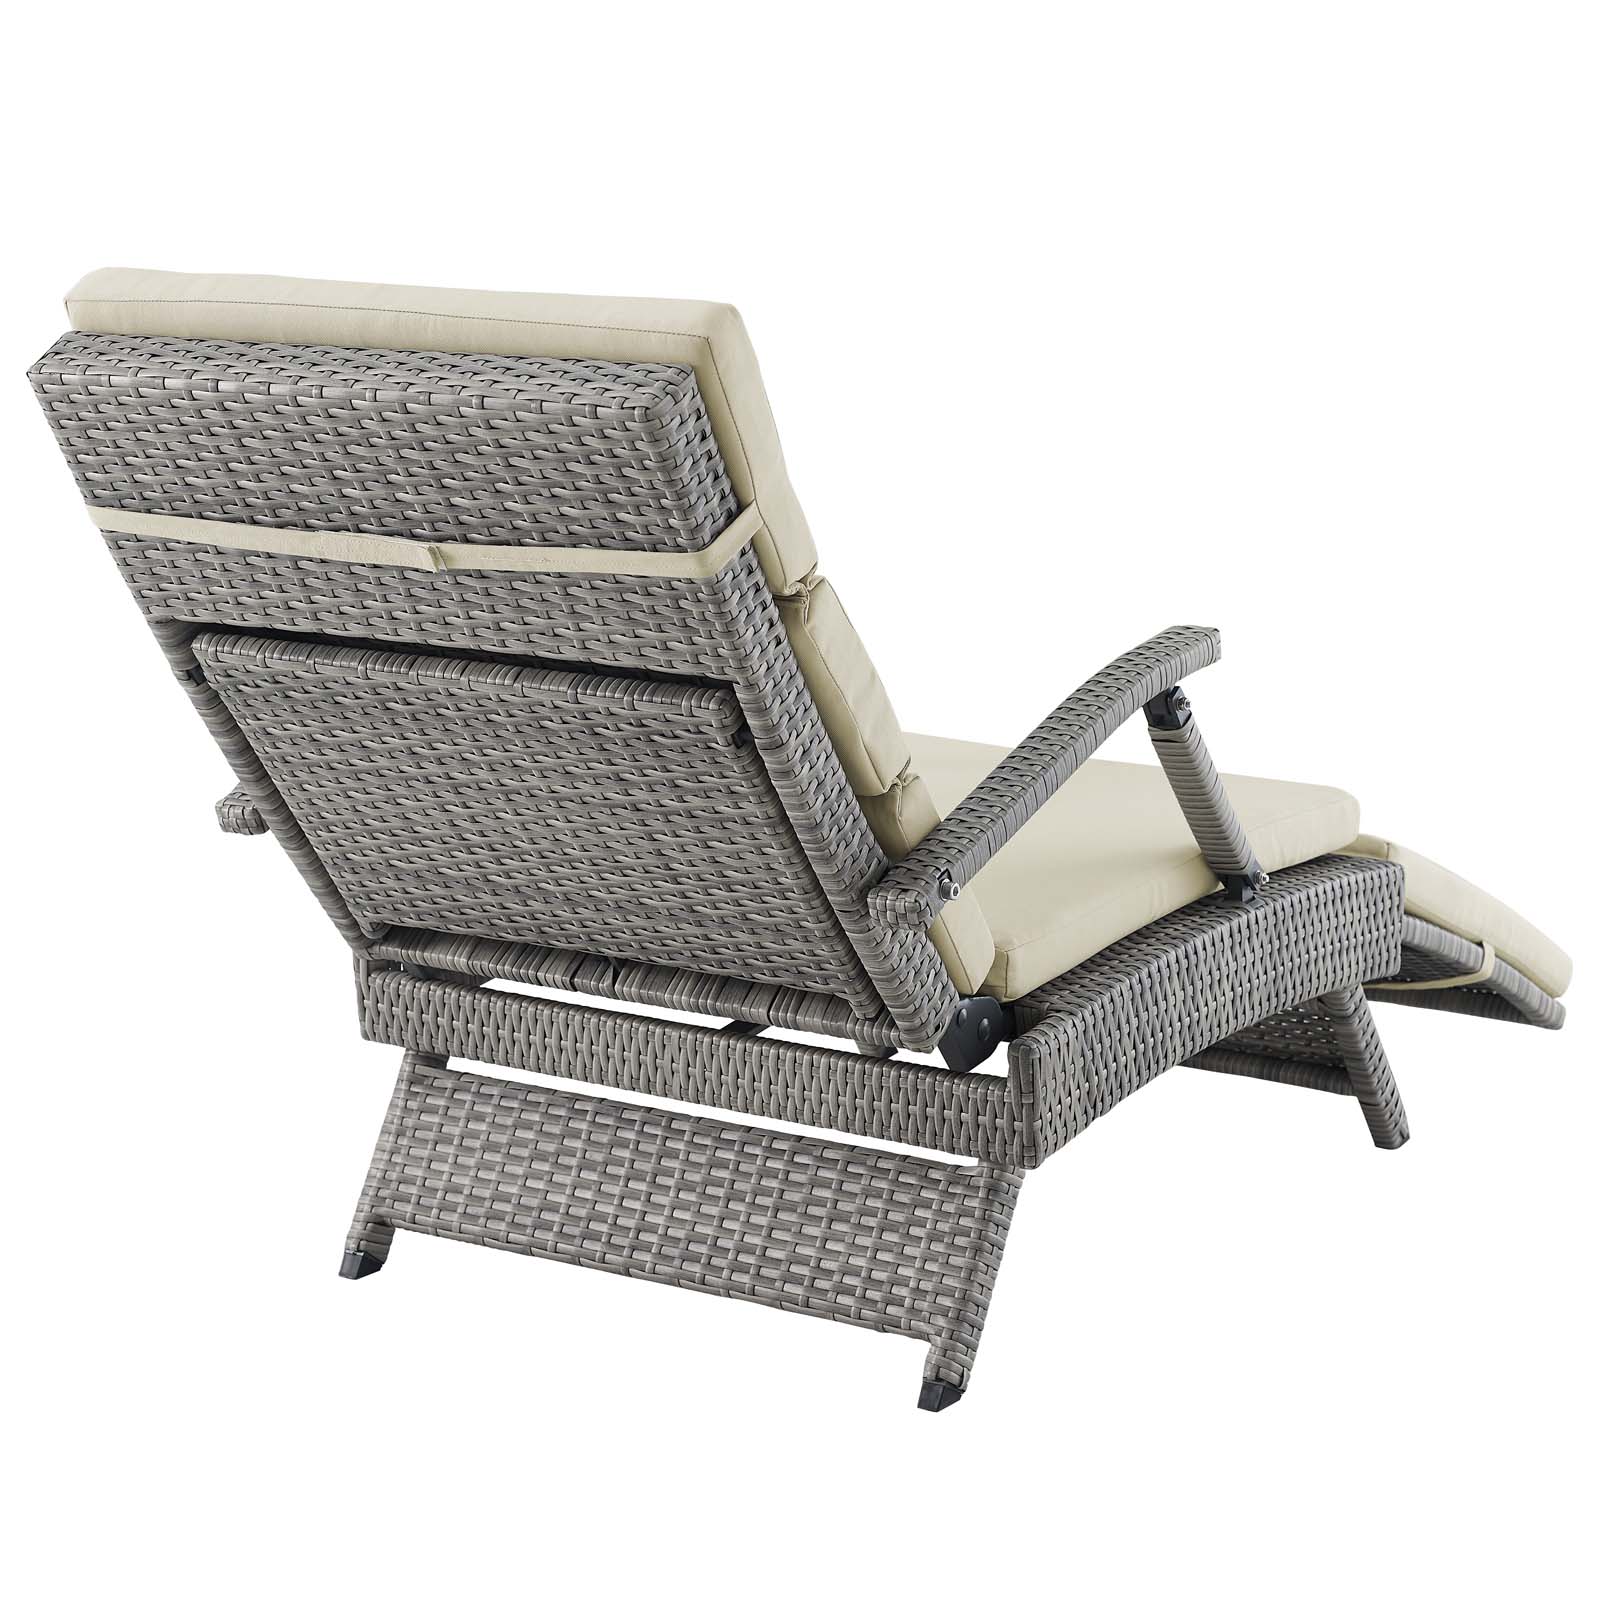 Modern Contemporary Urban Design Outdoor Patio Balcony Garden Furniture Lounge Chair Chaise, Rattan Wicker, Light Gray Beige - image 4 of 8